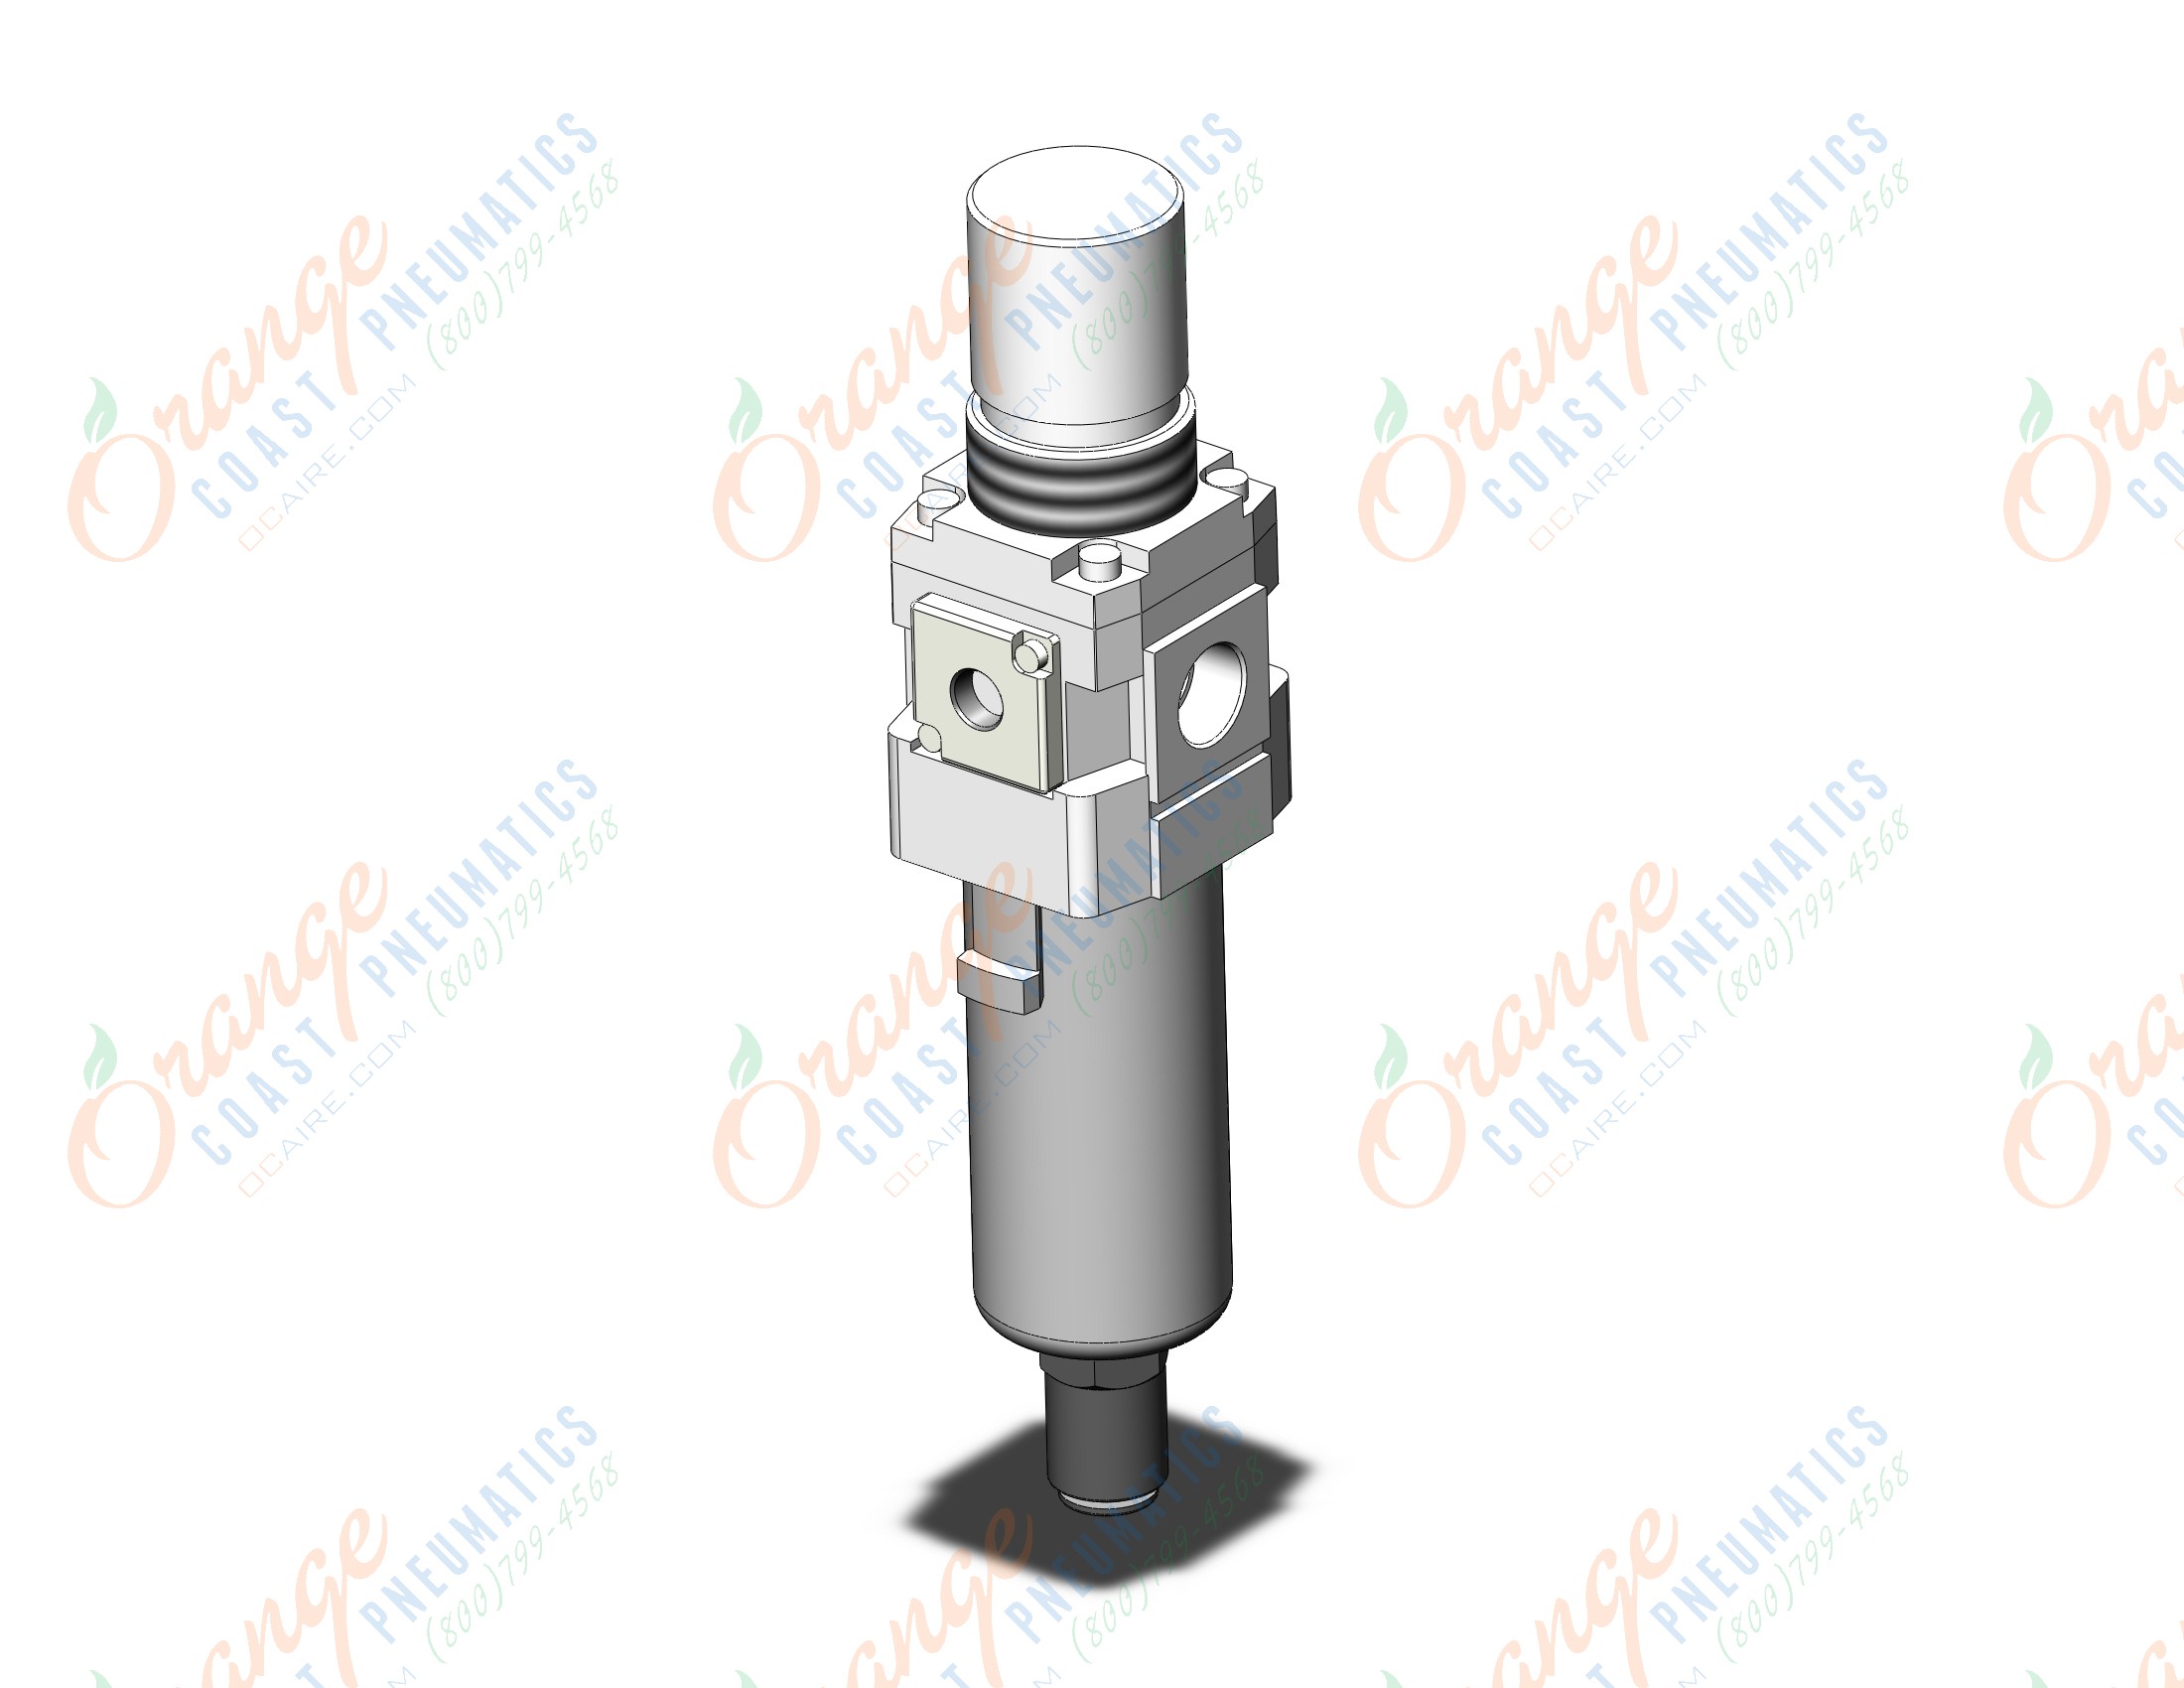 SMC AW30-N03D-6RZ-B filter/regulator, FILTER/REGULATOR, MODULAR F.R.L.